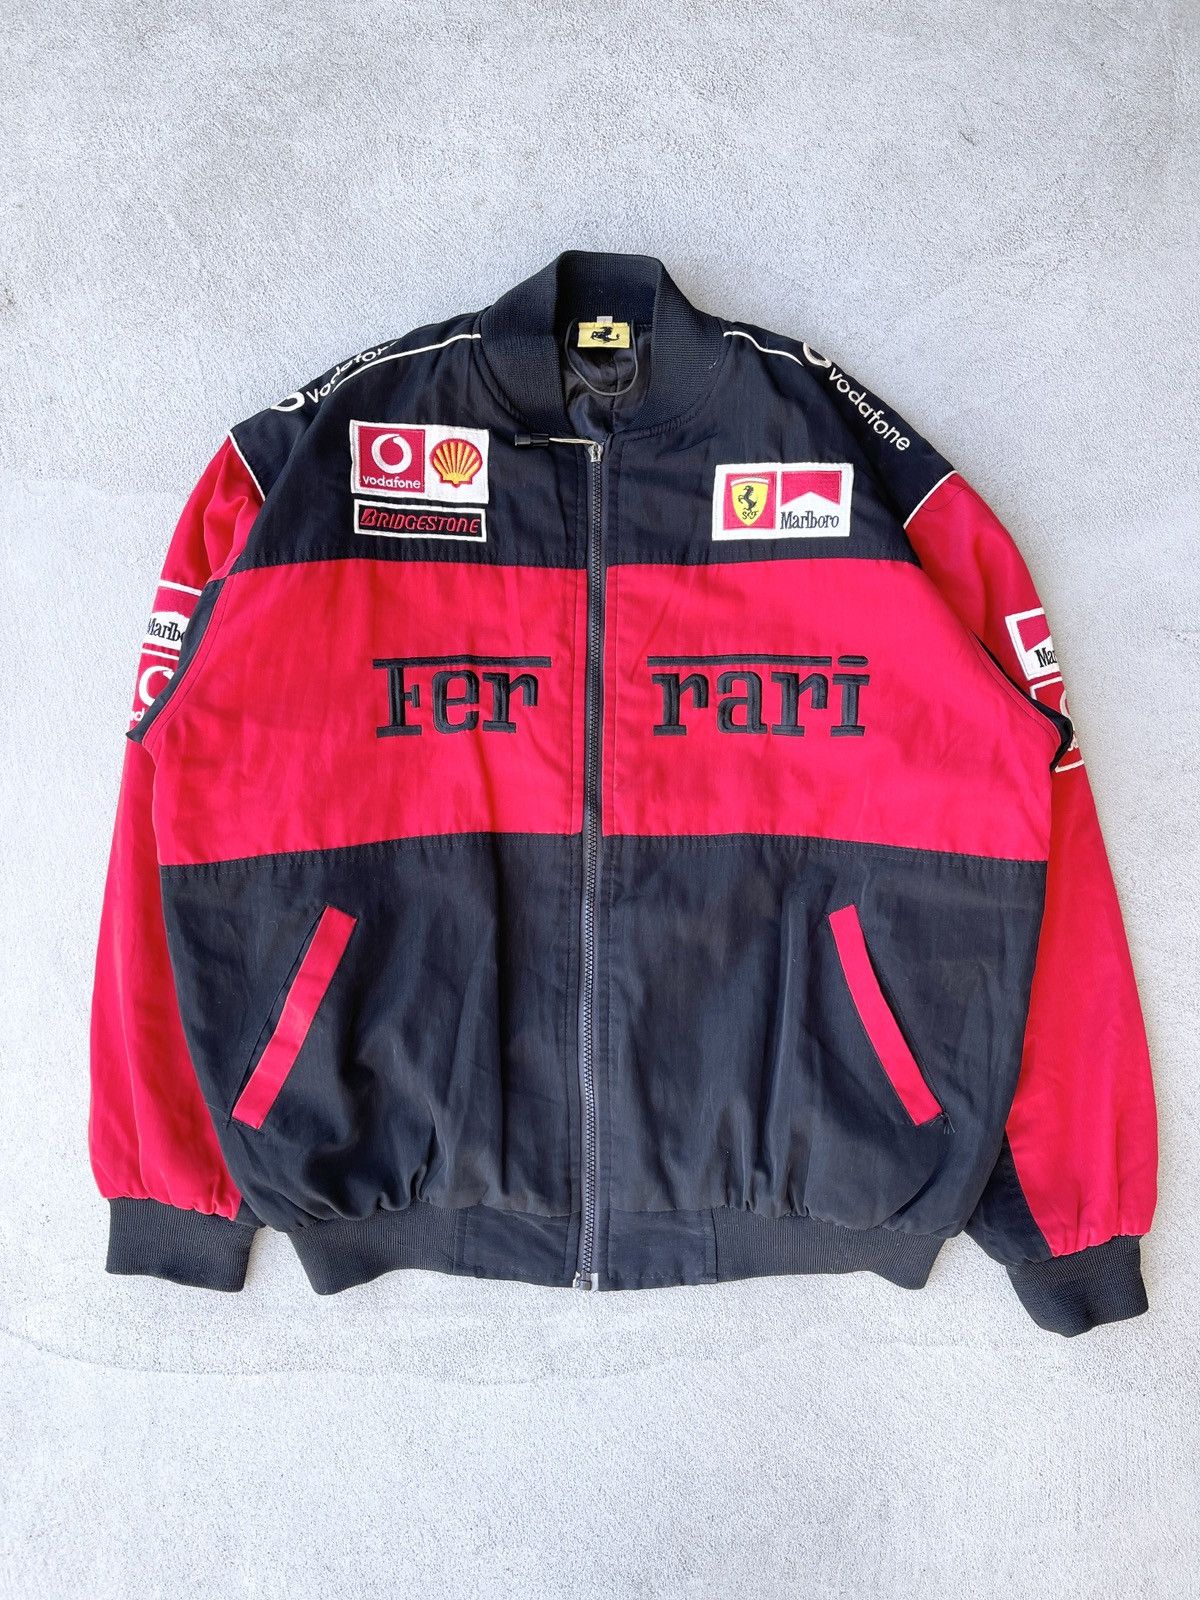 Vintage 2000s Ferrari Michael Schumacher F1 Racing Jacket - 1